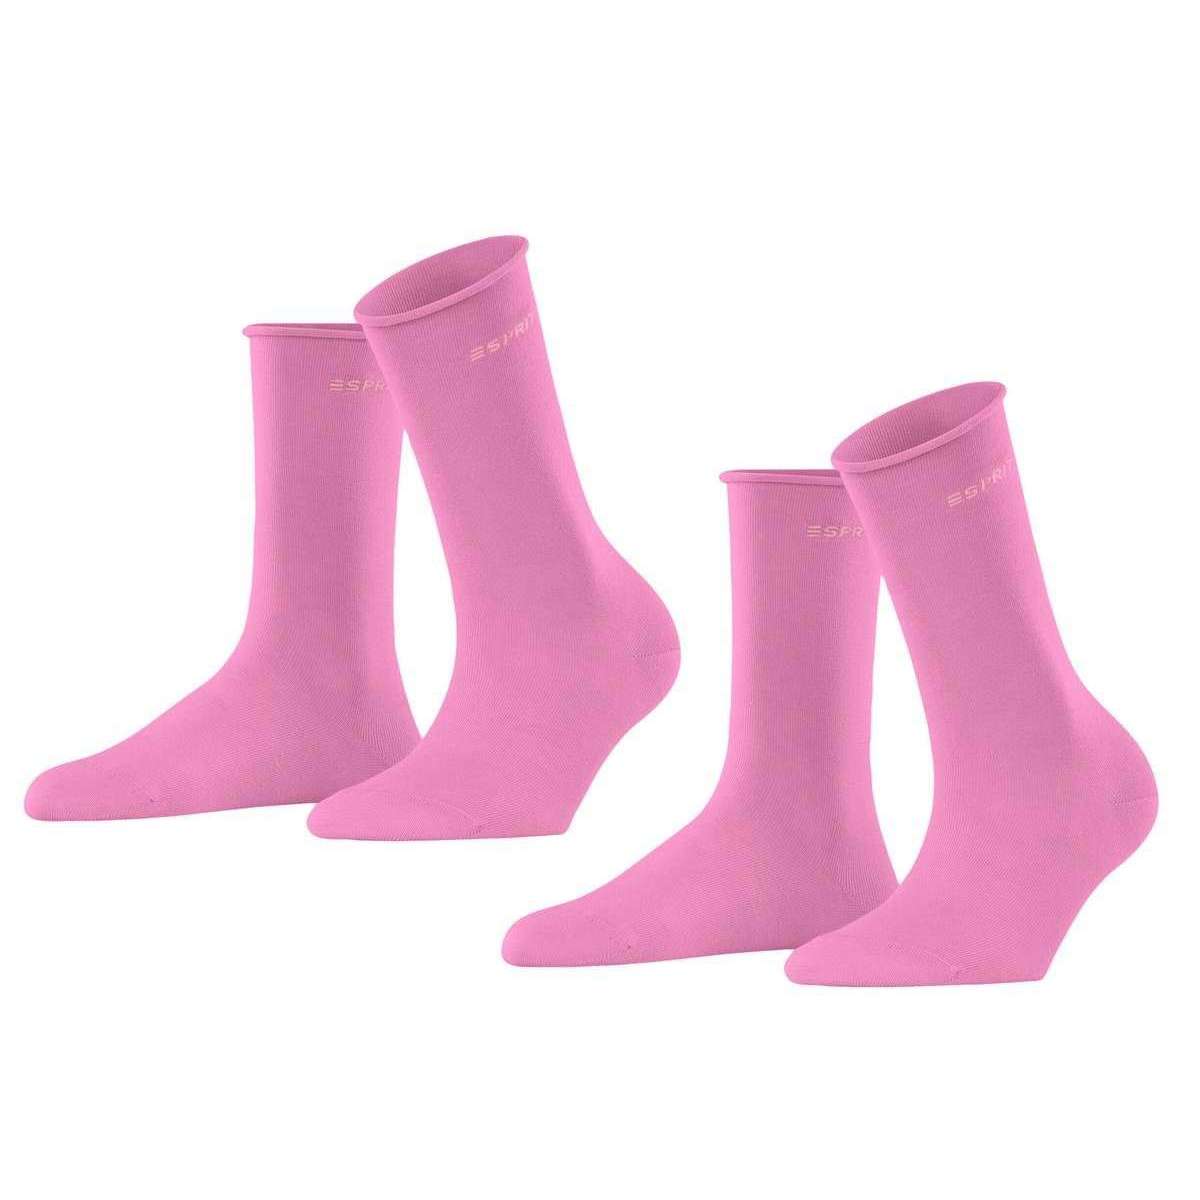 Esprit Basic Pure 2 Pack Socks - Rose Pink